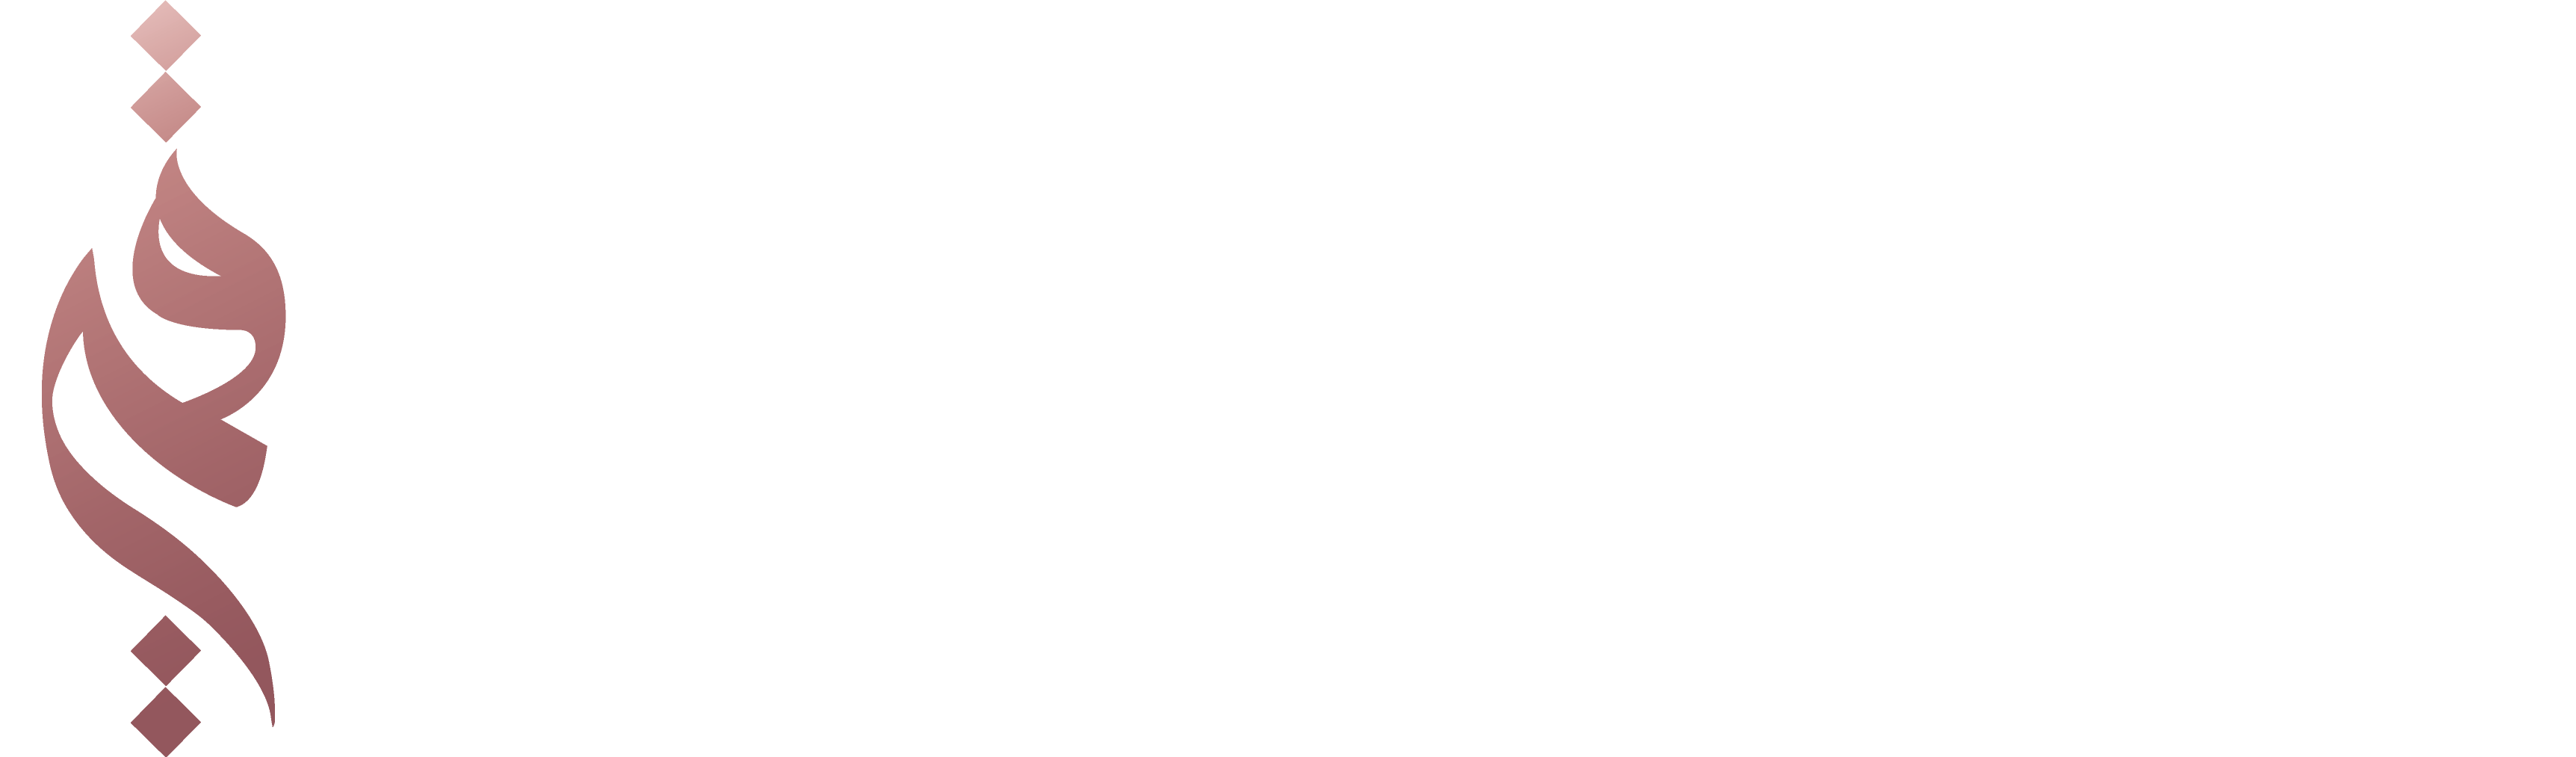 Top Brands Arabian Trading Co